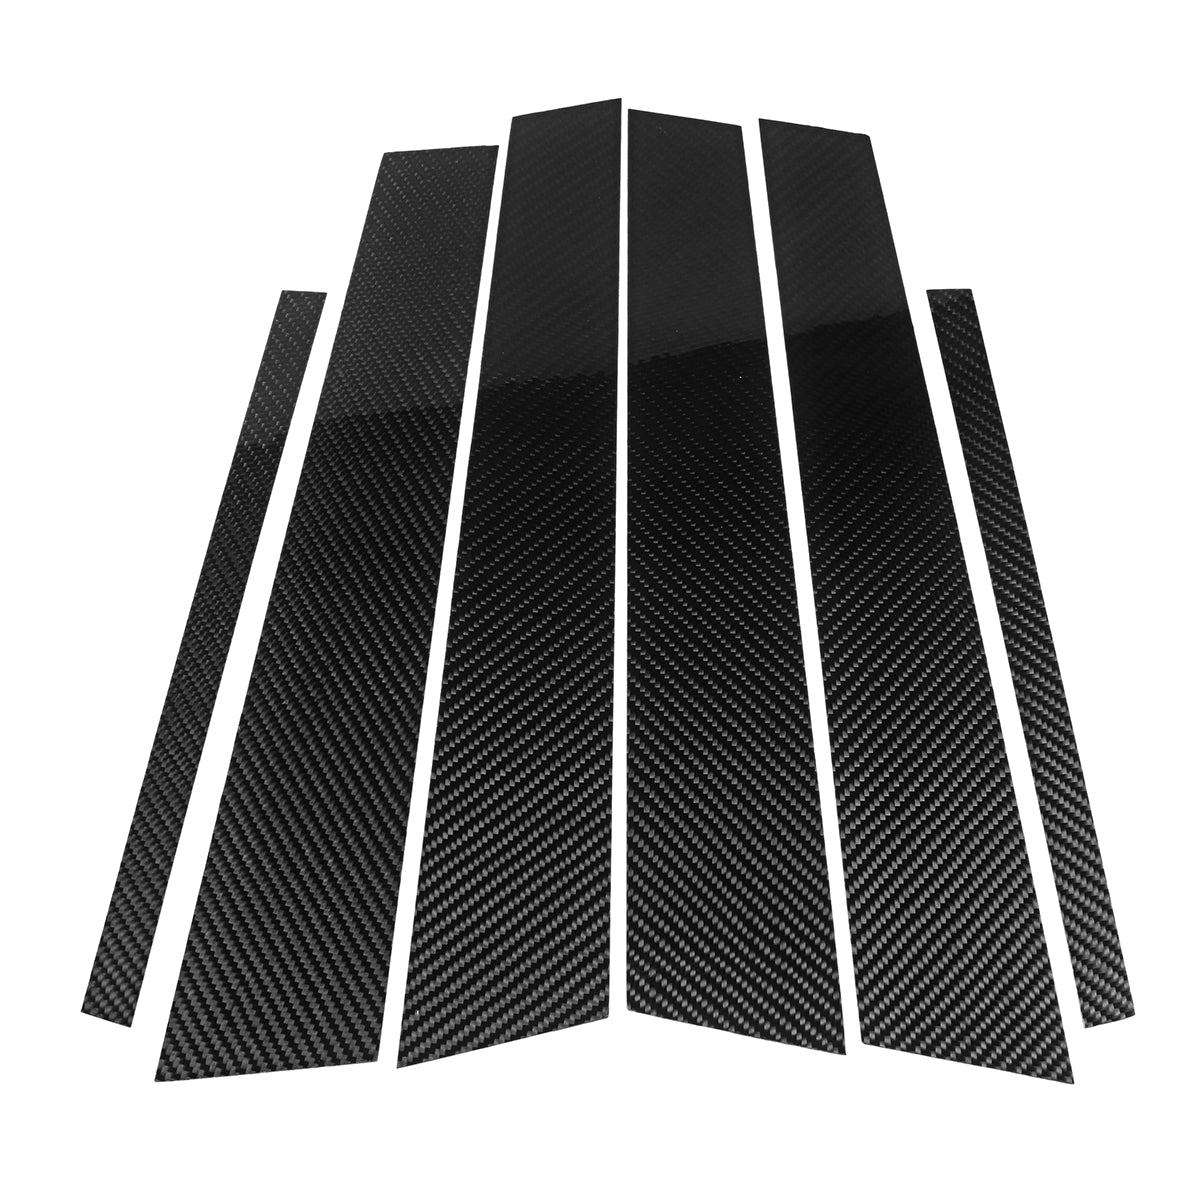 Black Carbon Fiber Car Window B-pillars Molding Trim Car Styling Stickers for BMW 3 5 Series